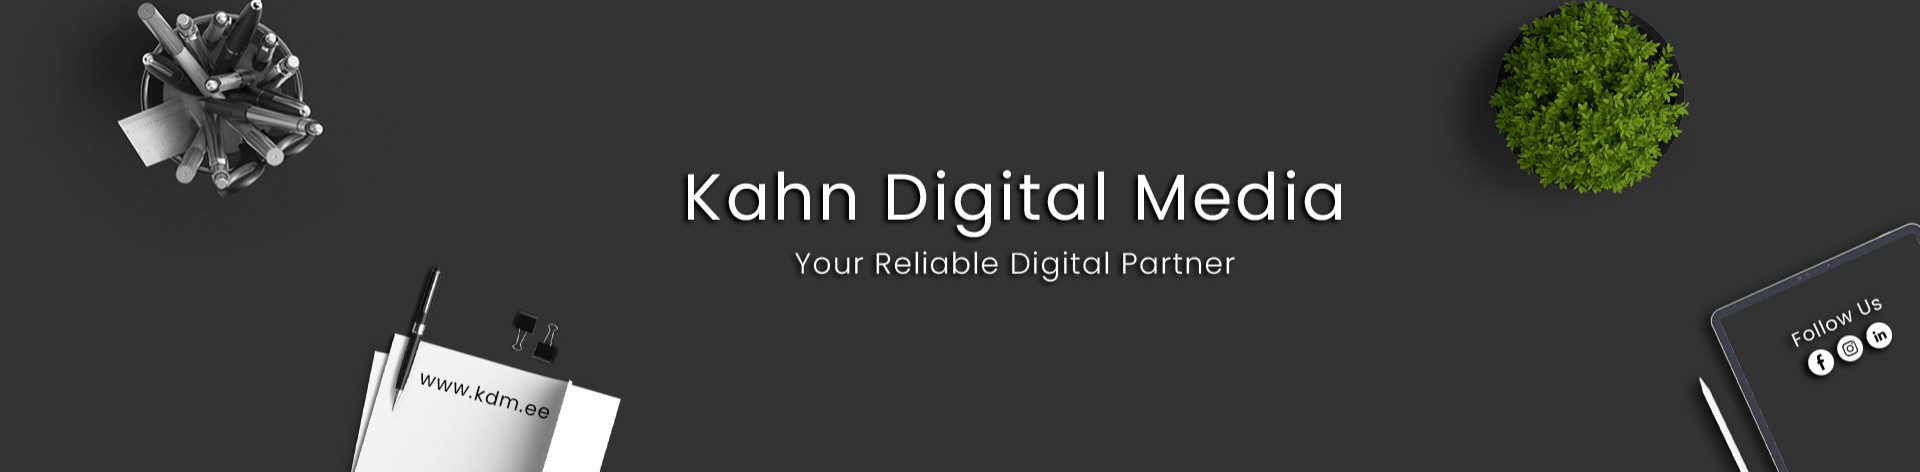 Kahn, Digital Media, The Digital Agency, website development, Production, Apps, Digital Marketing, SEO, Google ads, Mail Marketing